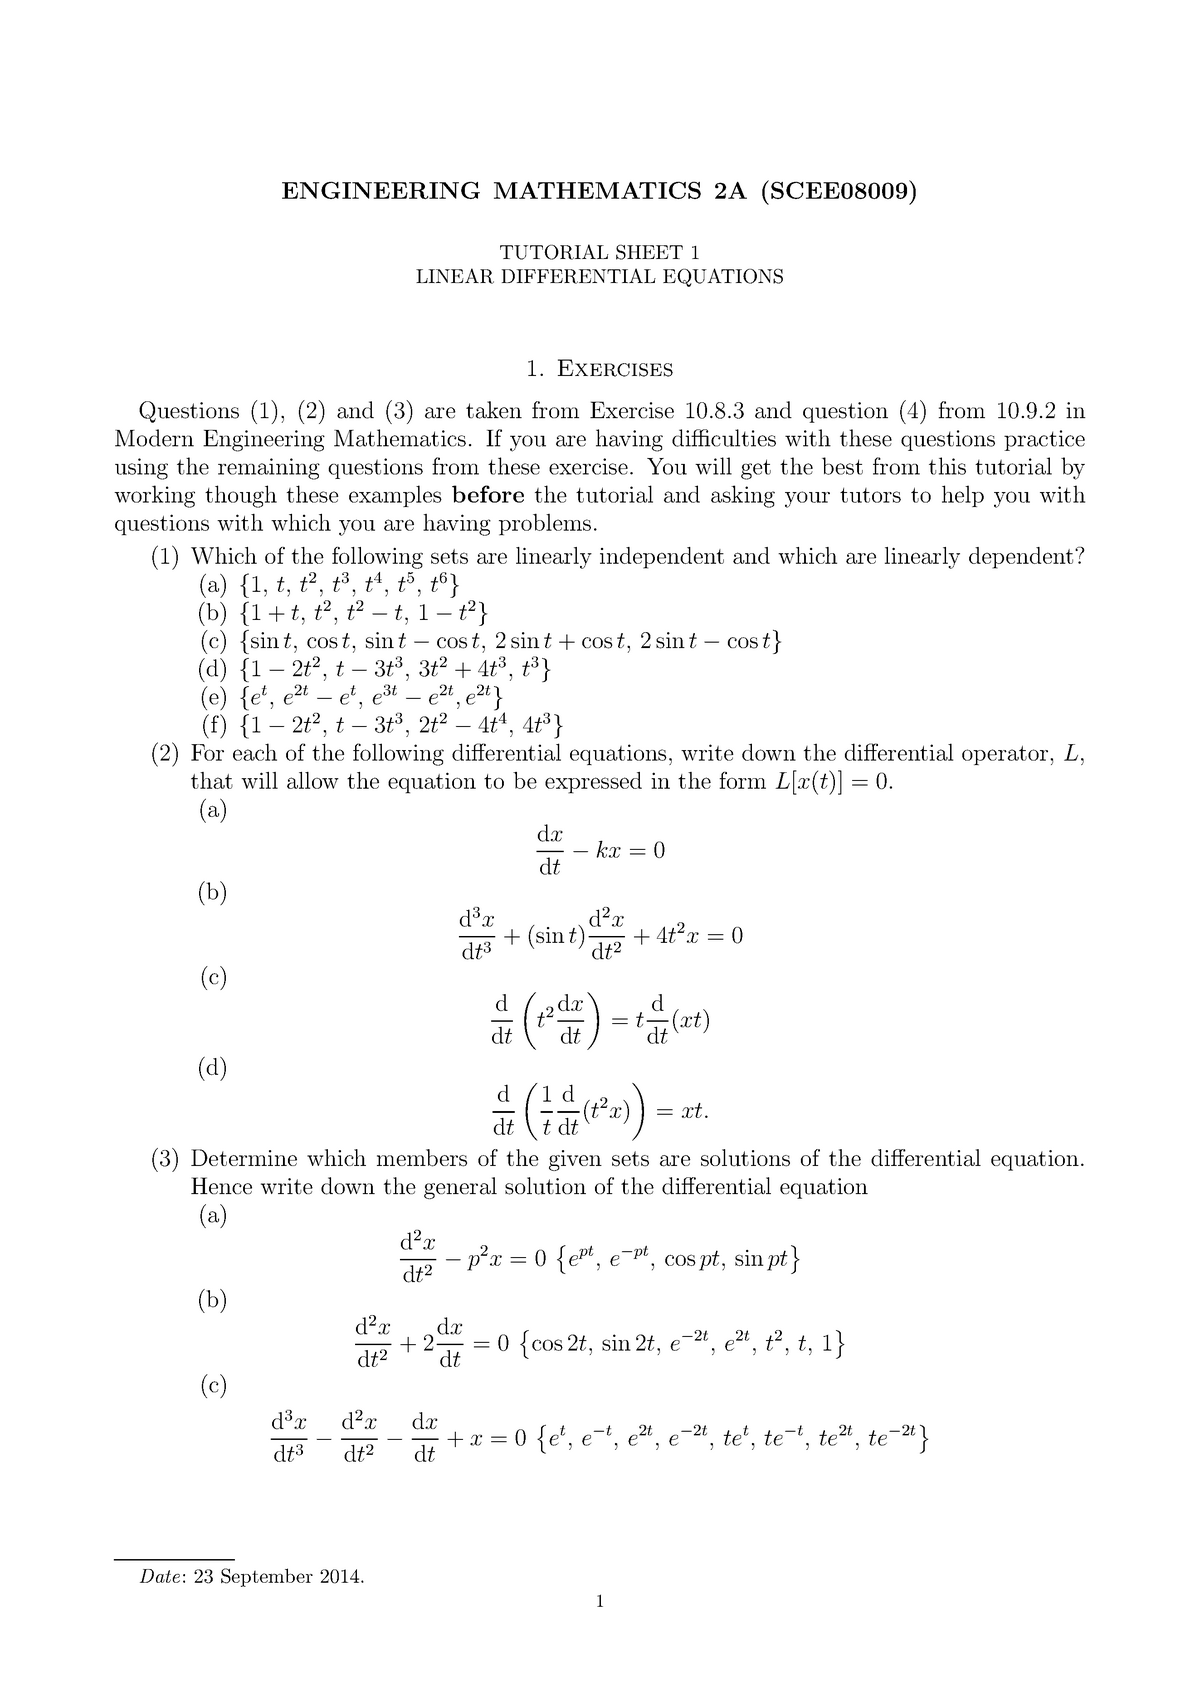 unit 8 further engineering mathematics assignment 2